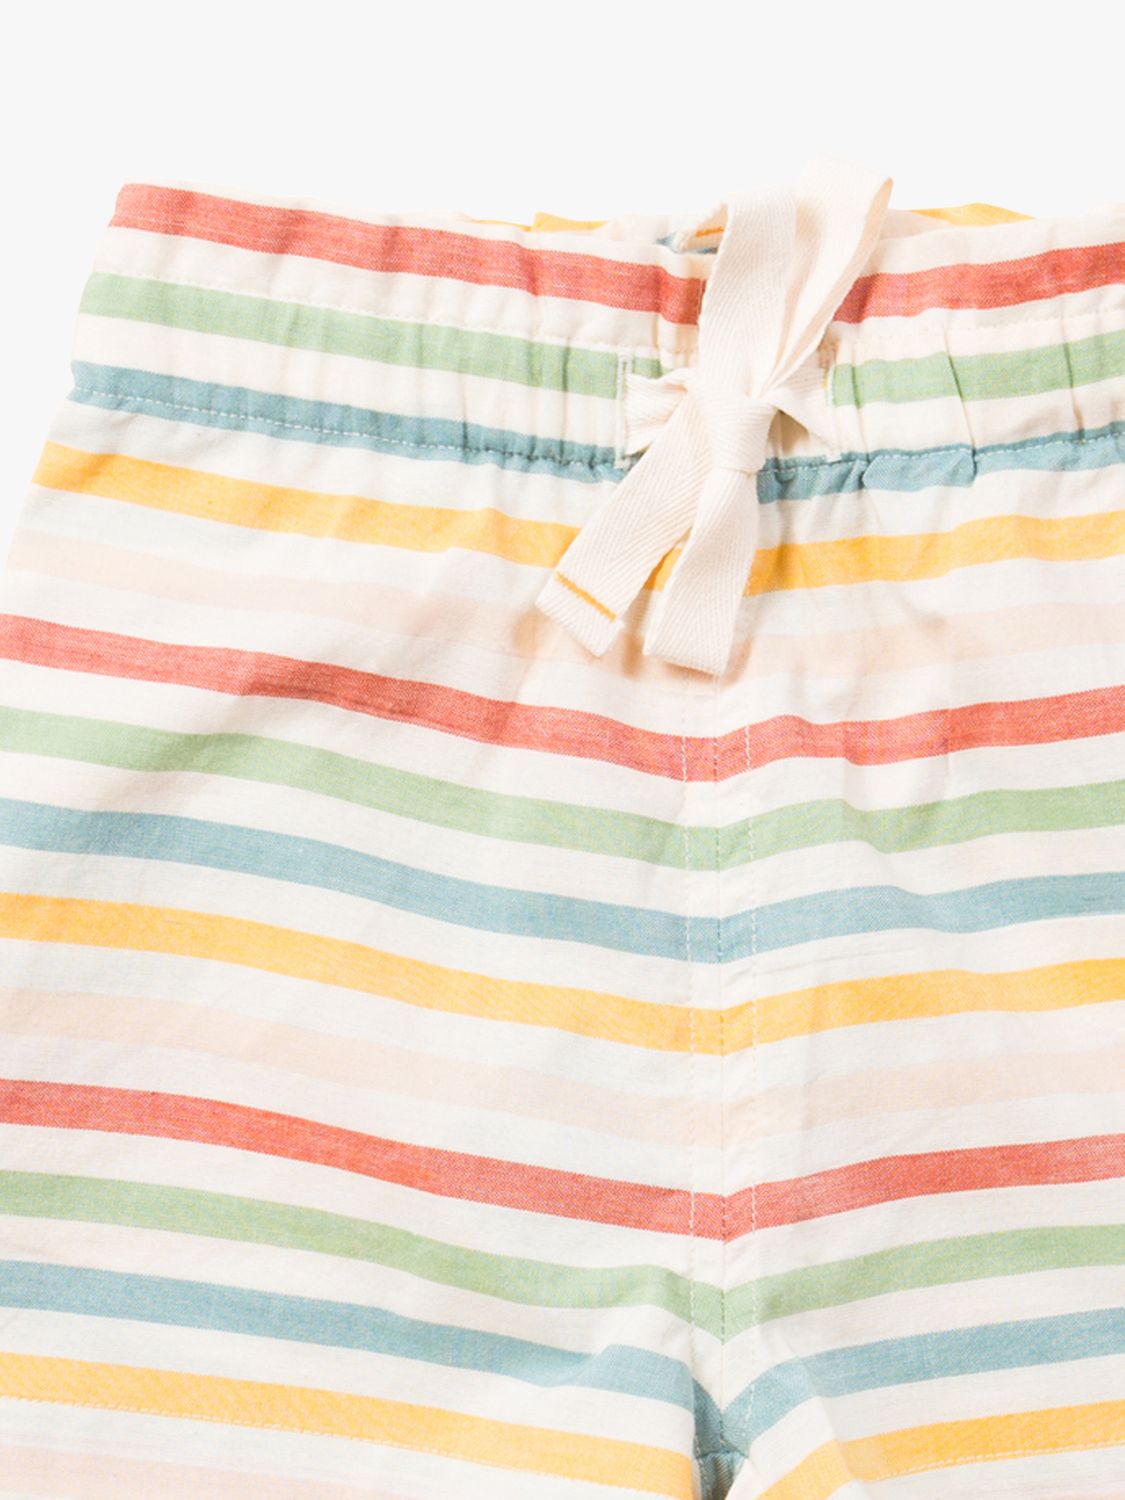 Little Green Radicals Baby Organic Cotton Rainbow Striped Shorts, Multi, 5-6 years